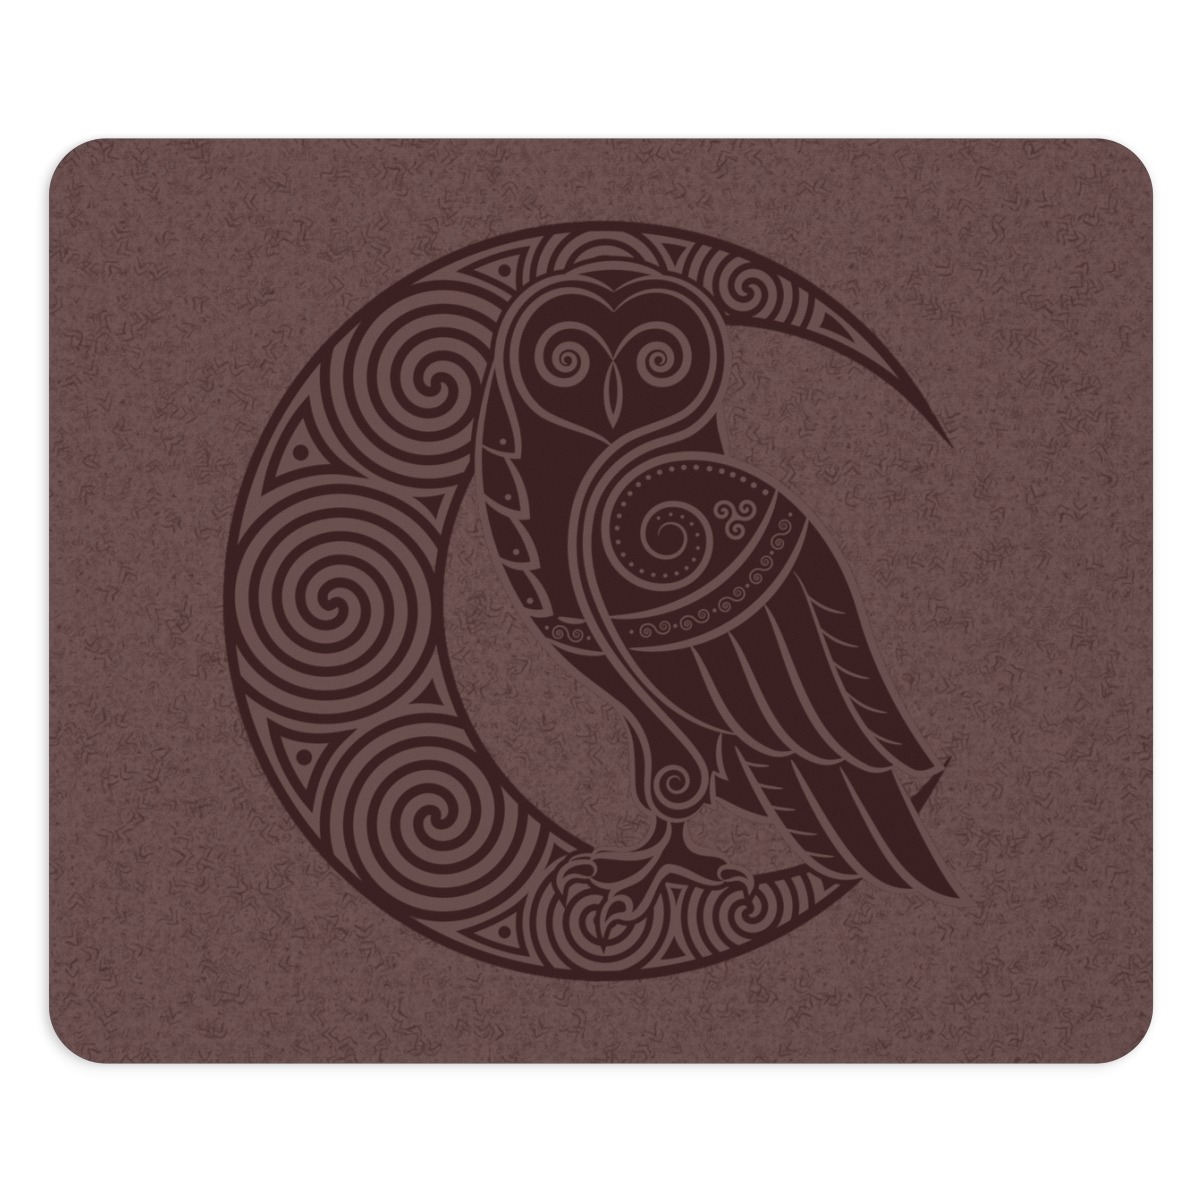 Maroon Celtic Owl Moon Mouse Pad